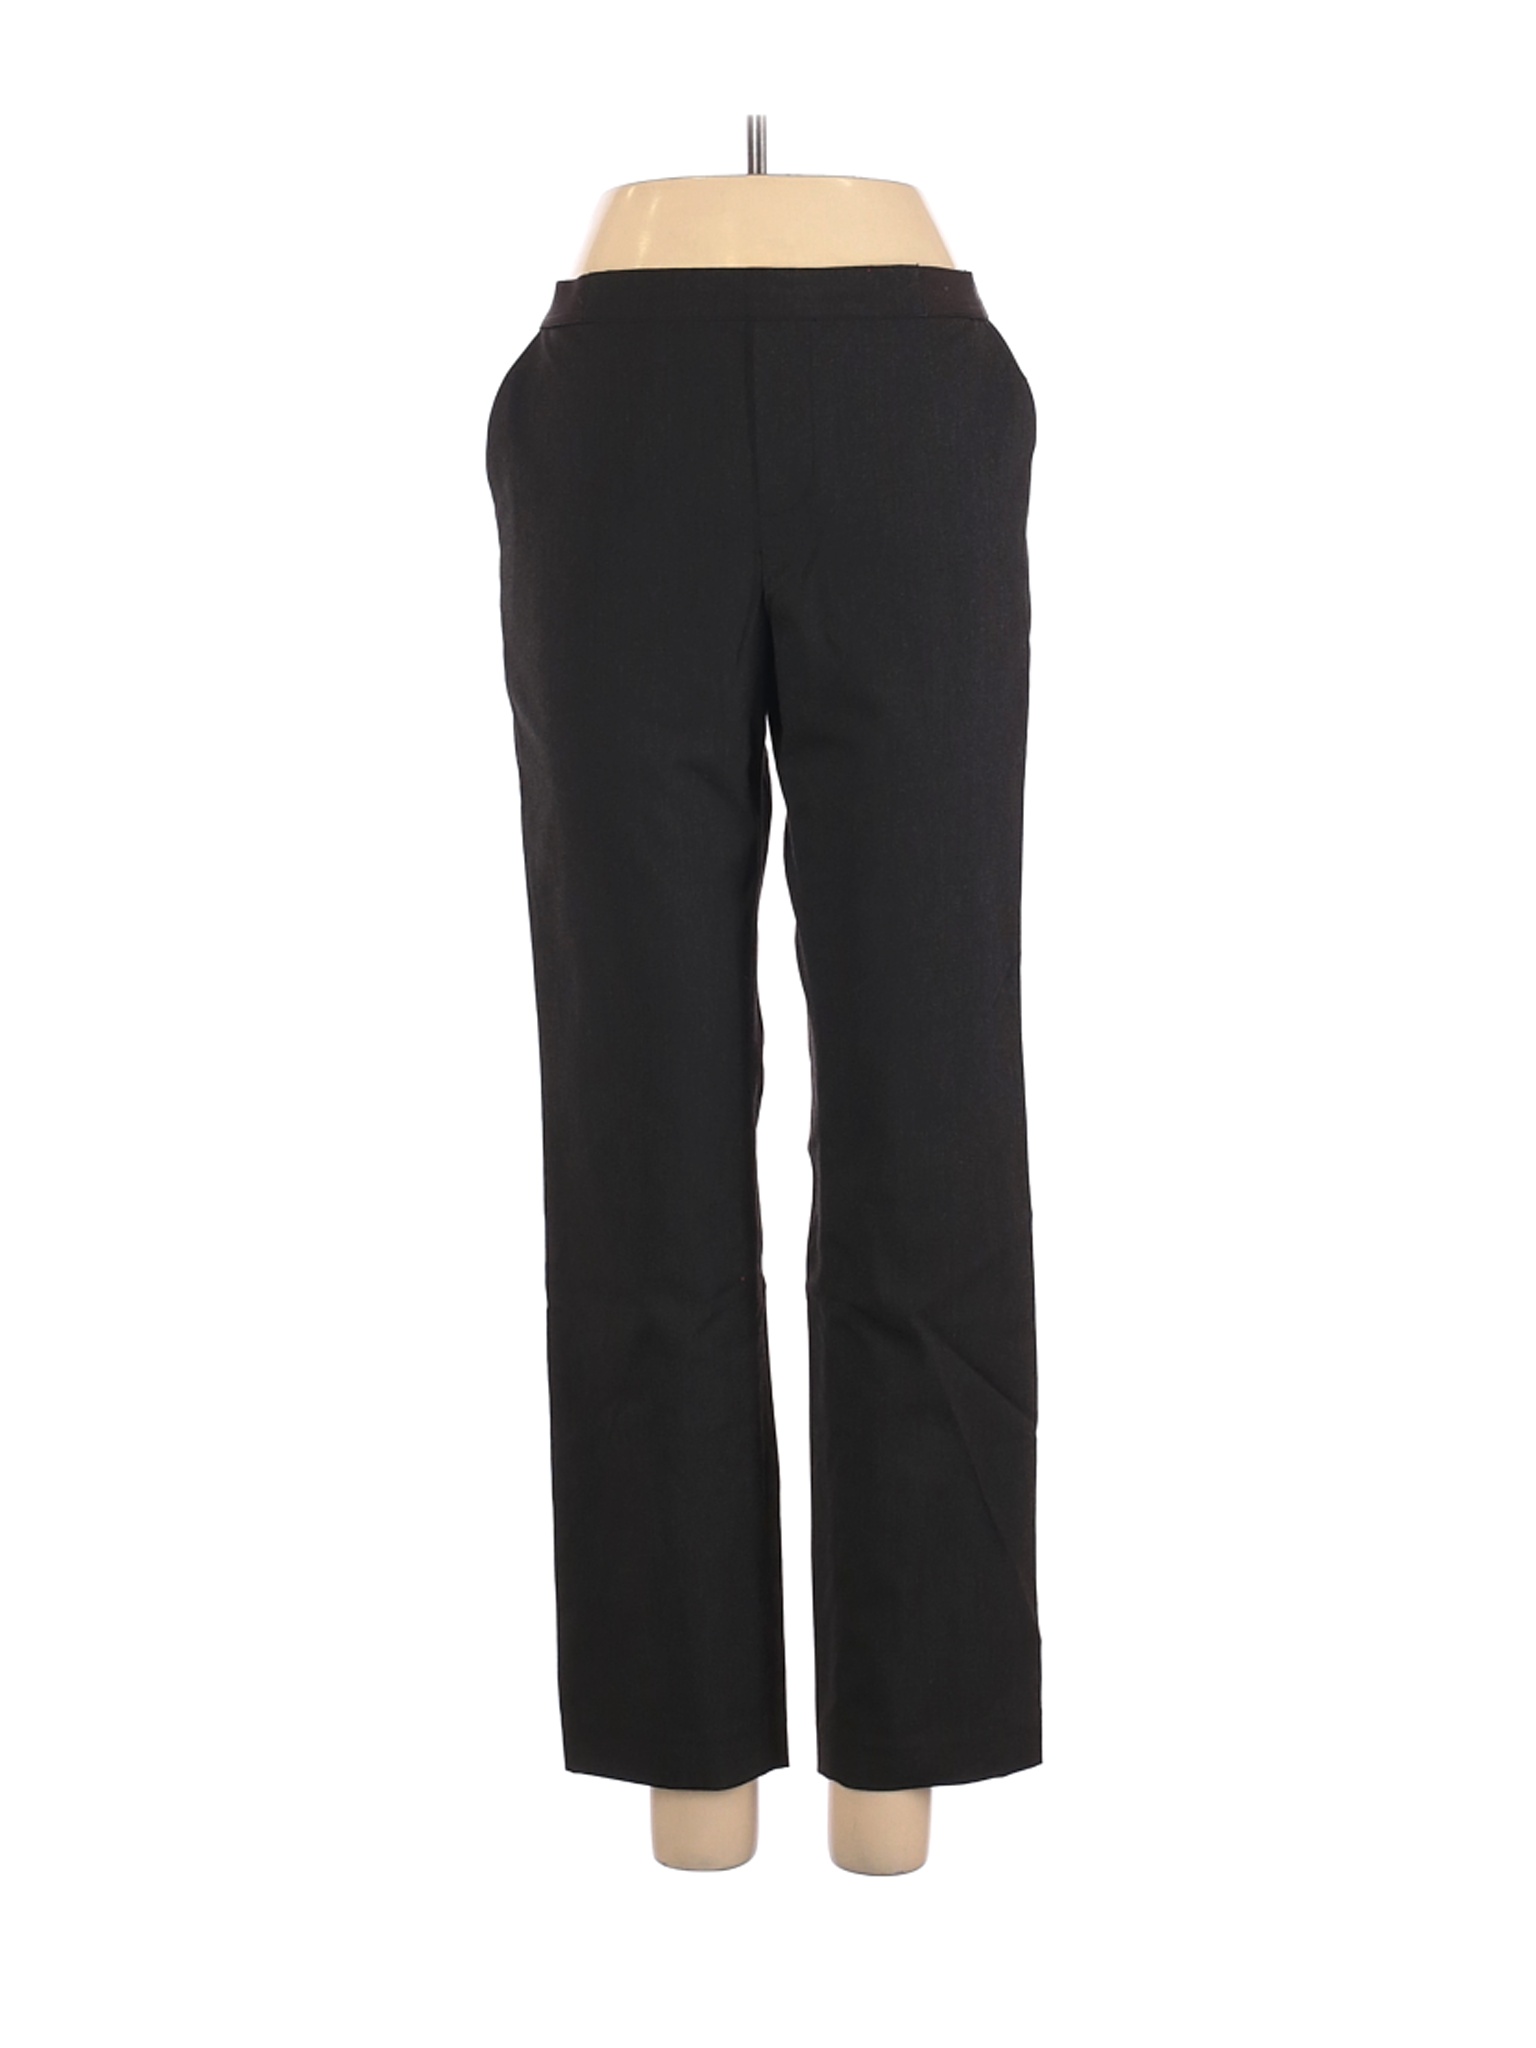 Uniqlo Women Black Dress Pants S | eBay